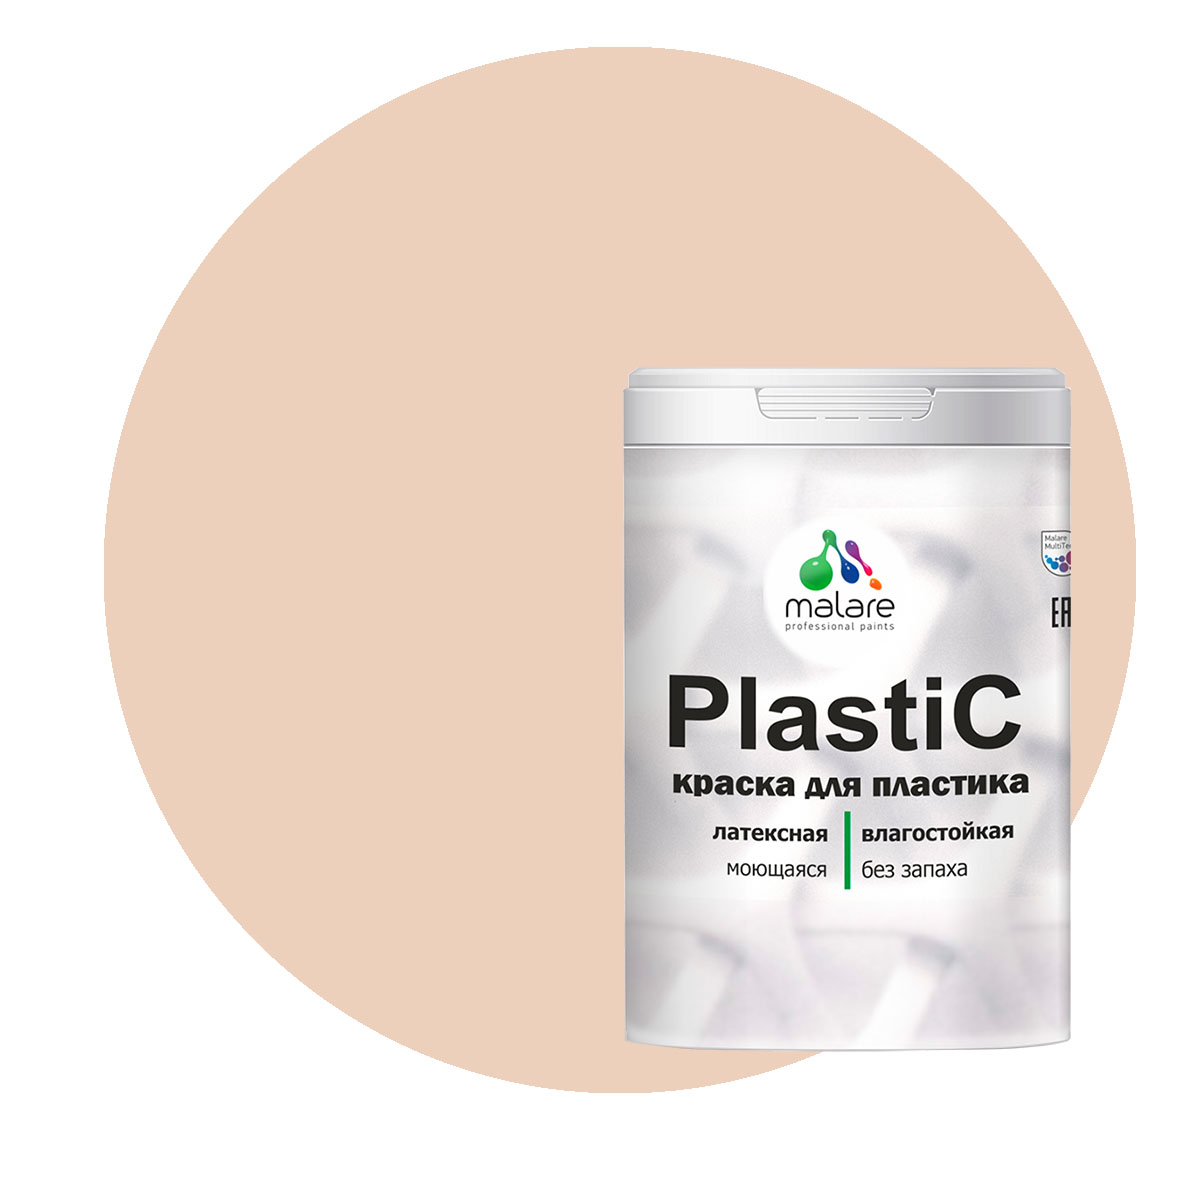 Краска Malare PlastiC для пластика, ПВХ, для сайдинга, эффект дежавю, 2 кг. краска malare plastic для пластика пвх для сайдинга розовый пион 2 кг